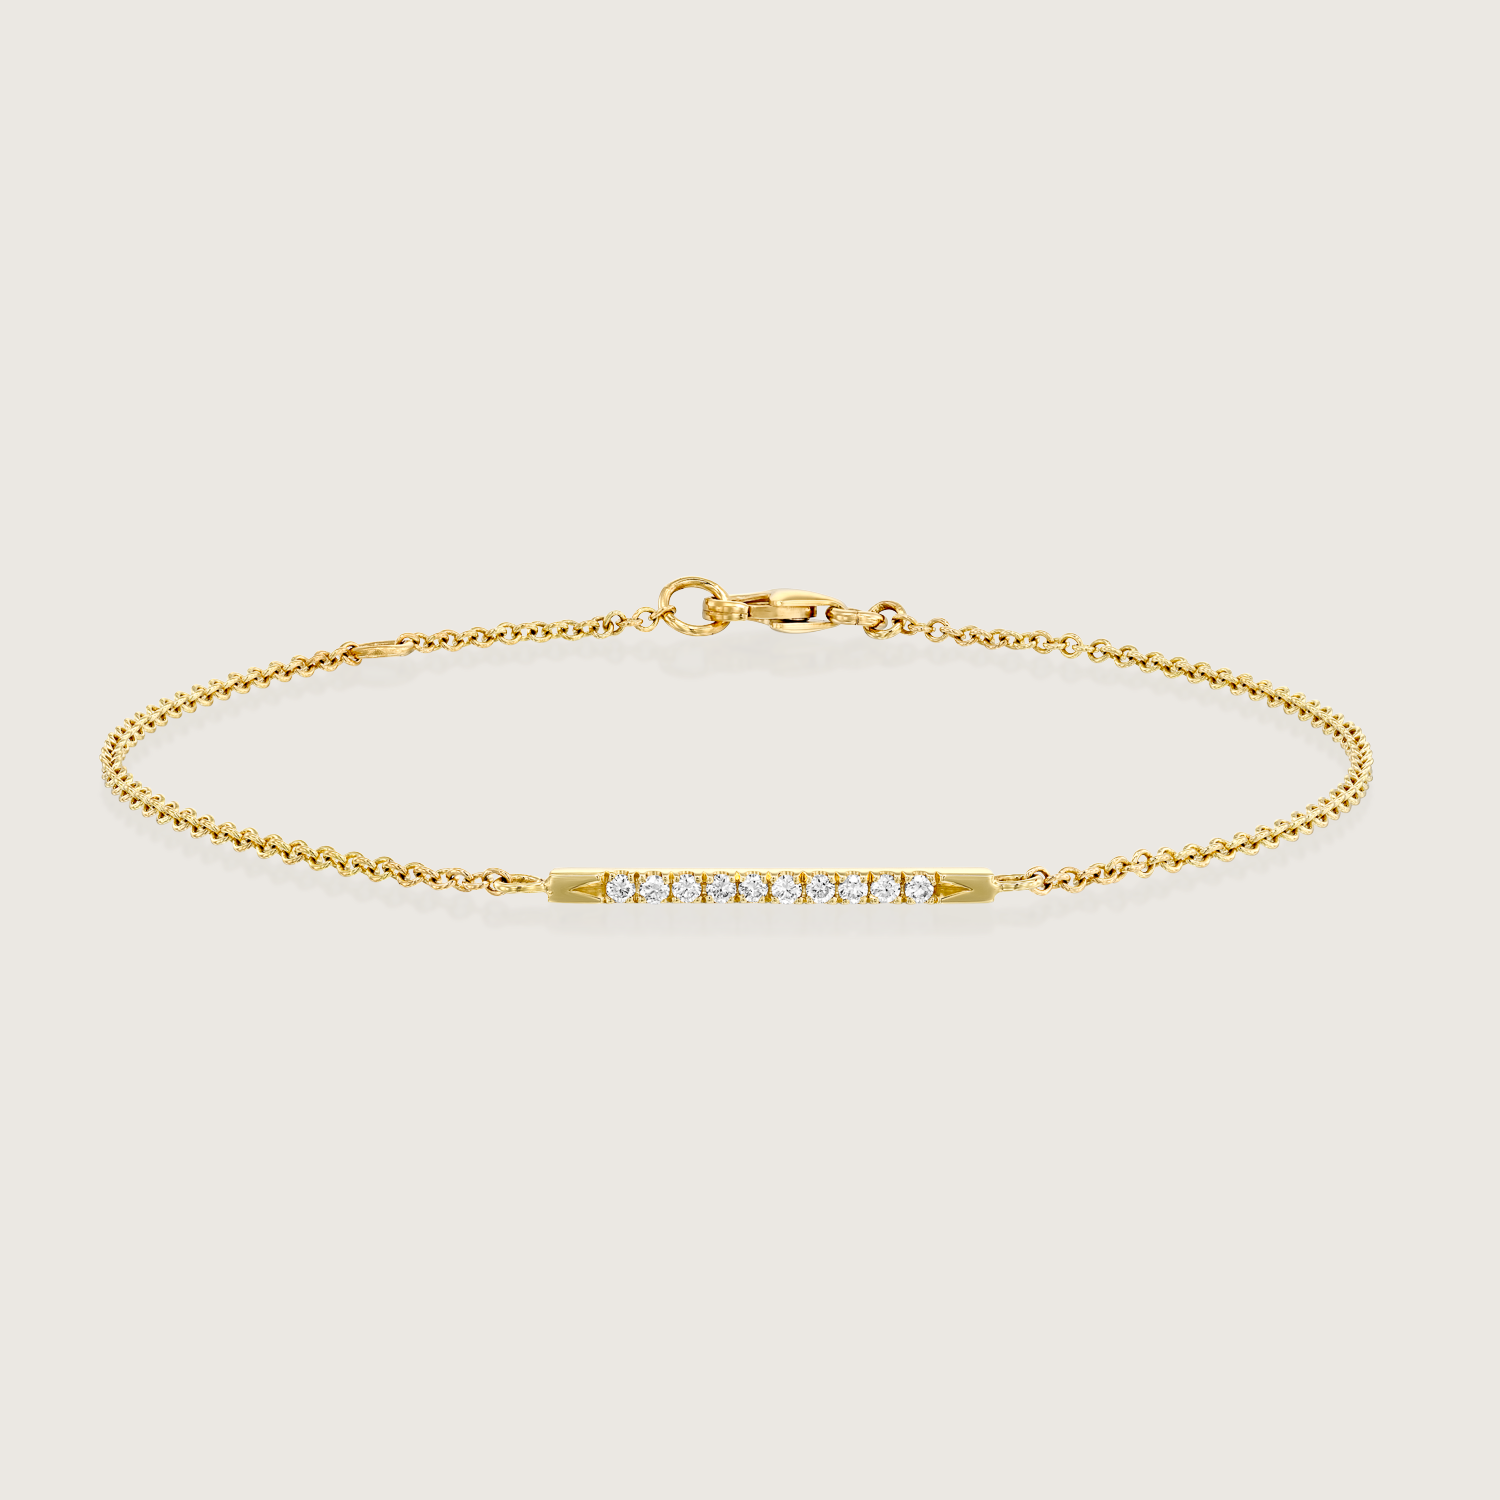 Andrea Gold Bracelet Set With White Diamonds